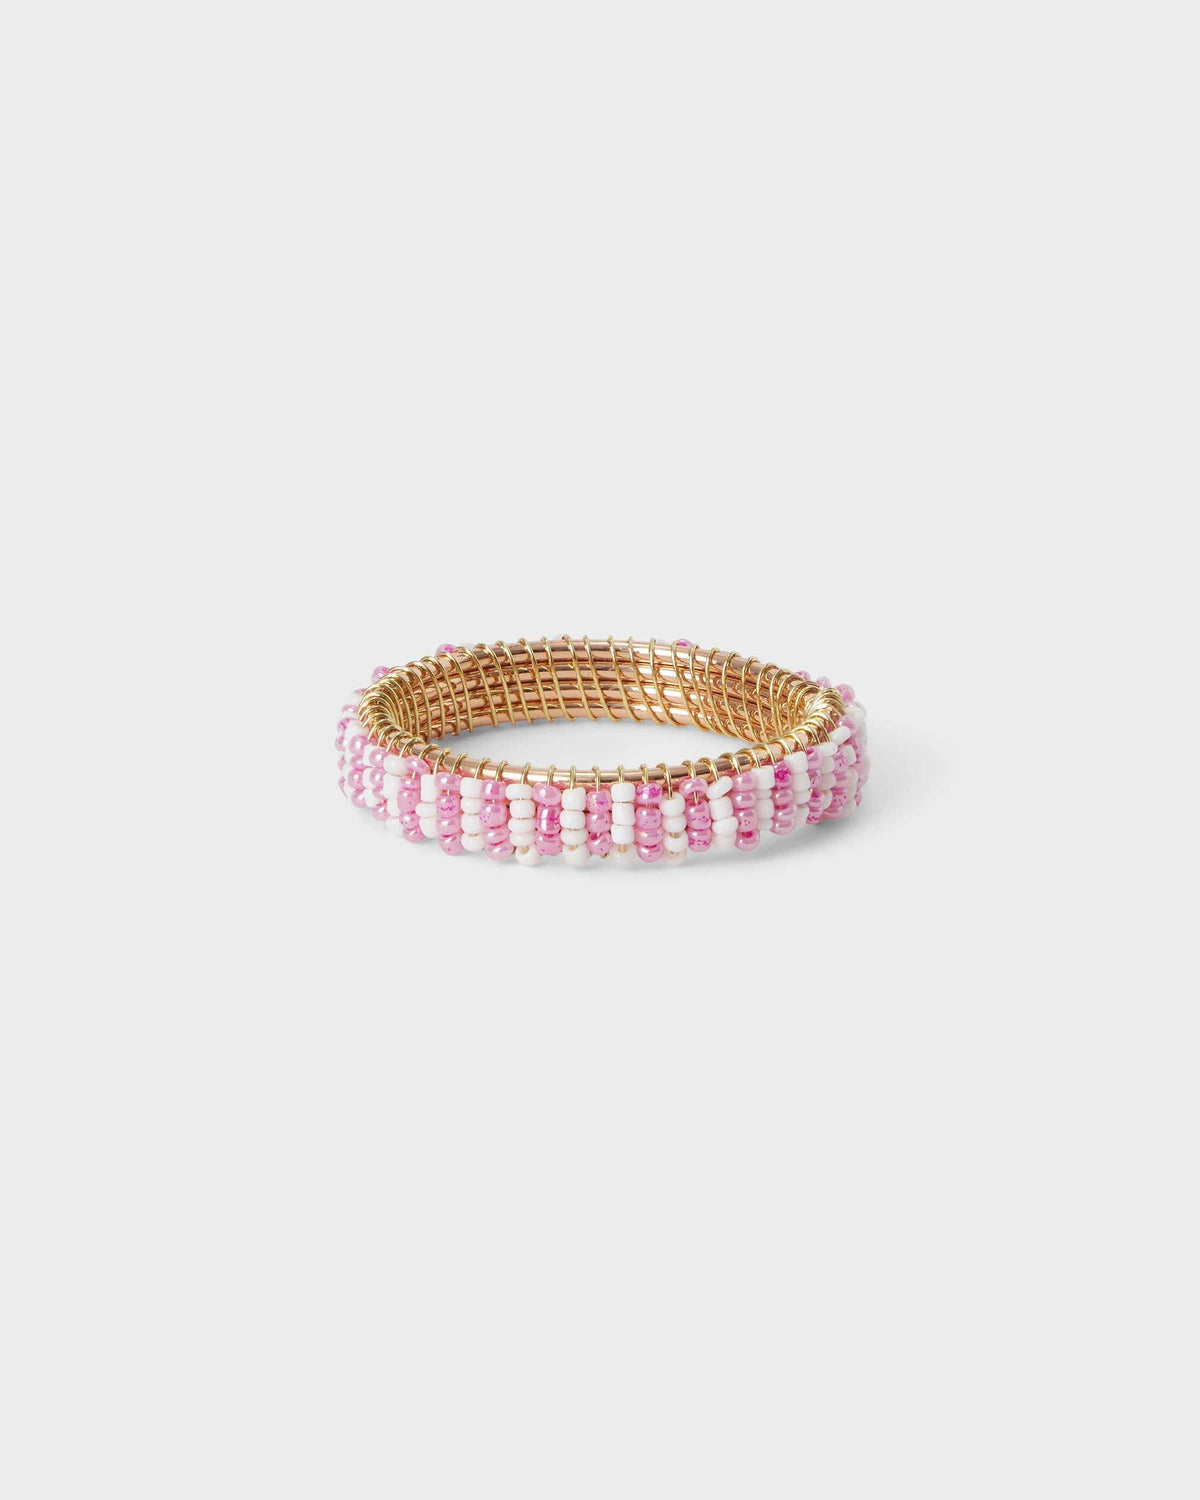 Napkin Ring - Pink and White beads - Von Home